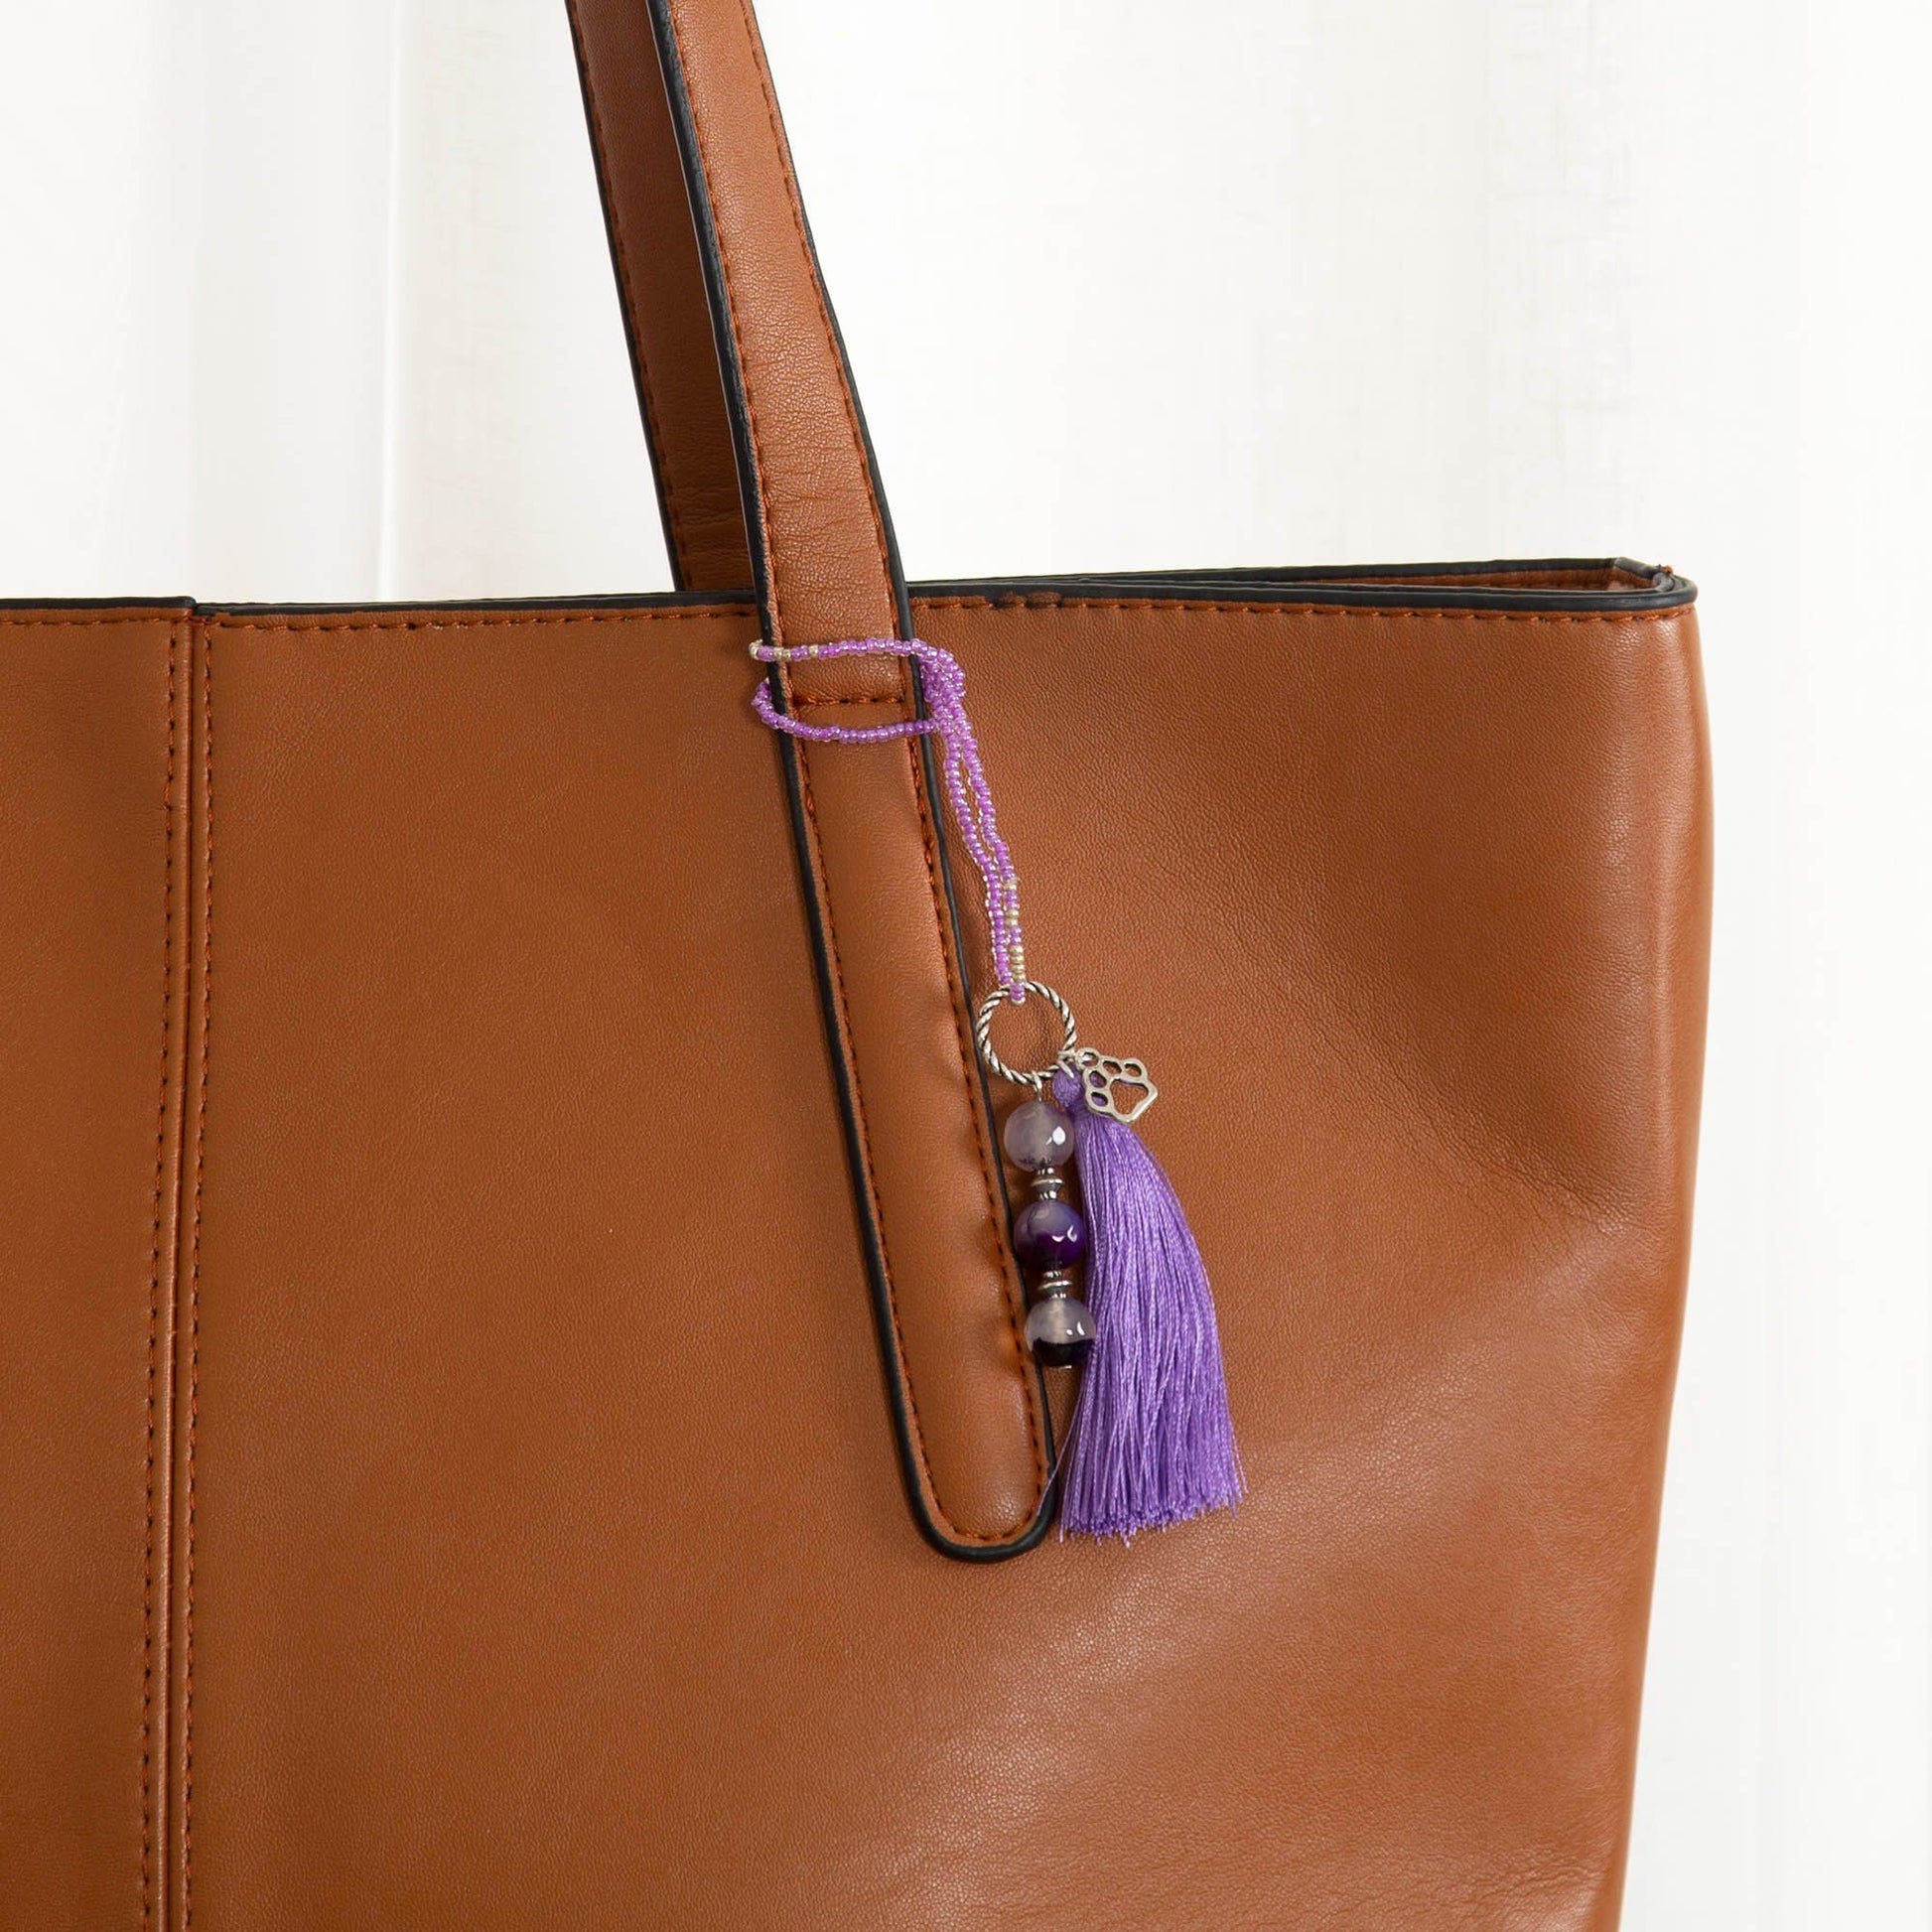 Promo - Beaded Purple Paw Bag Charm!